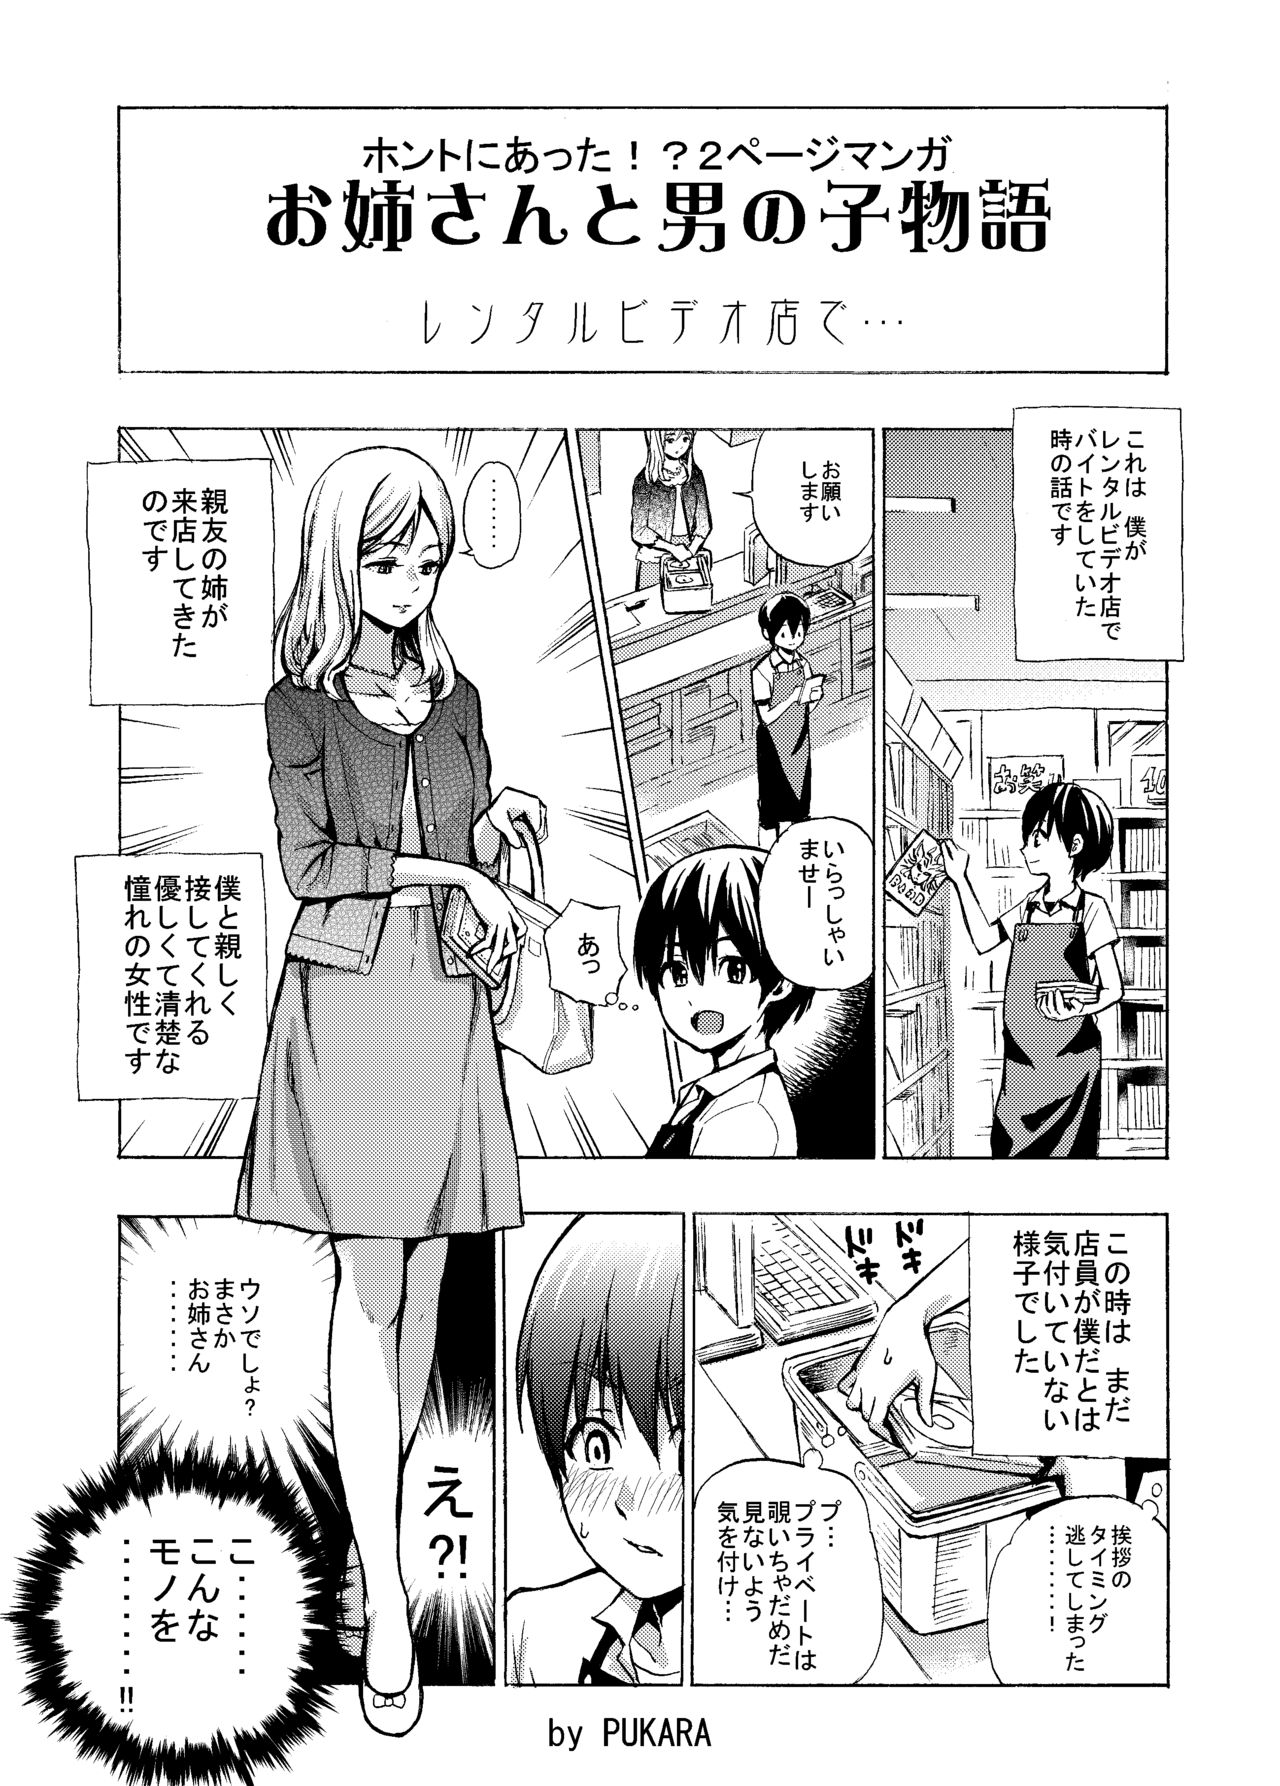 [PUKARA] Taikendan ppoi 2 Page Manga. Onee-san no Hou mo Tomaranakatta. [PUKARA] 体験談っぽい2ページマンガ。お姉さんの方も止まらなかった。